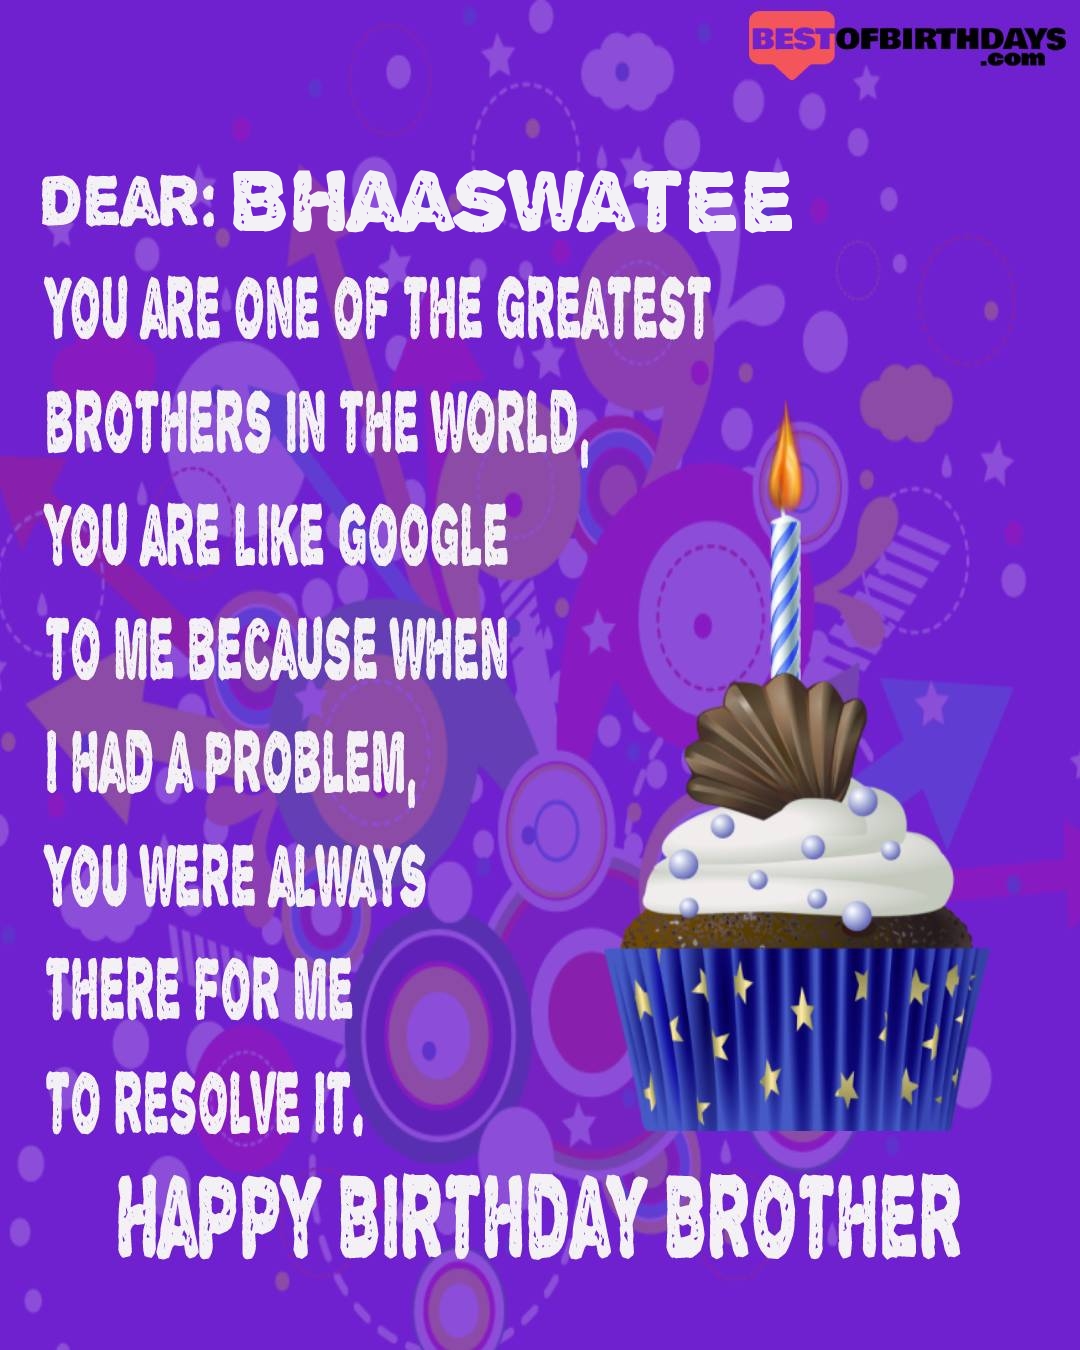 Happy birthday bhaaswatee bhai brother bro